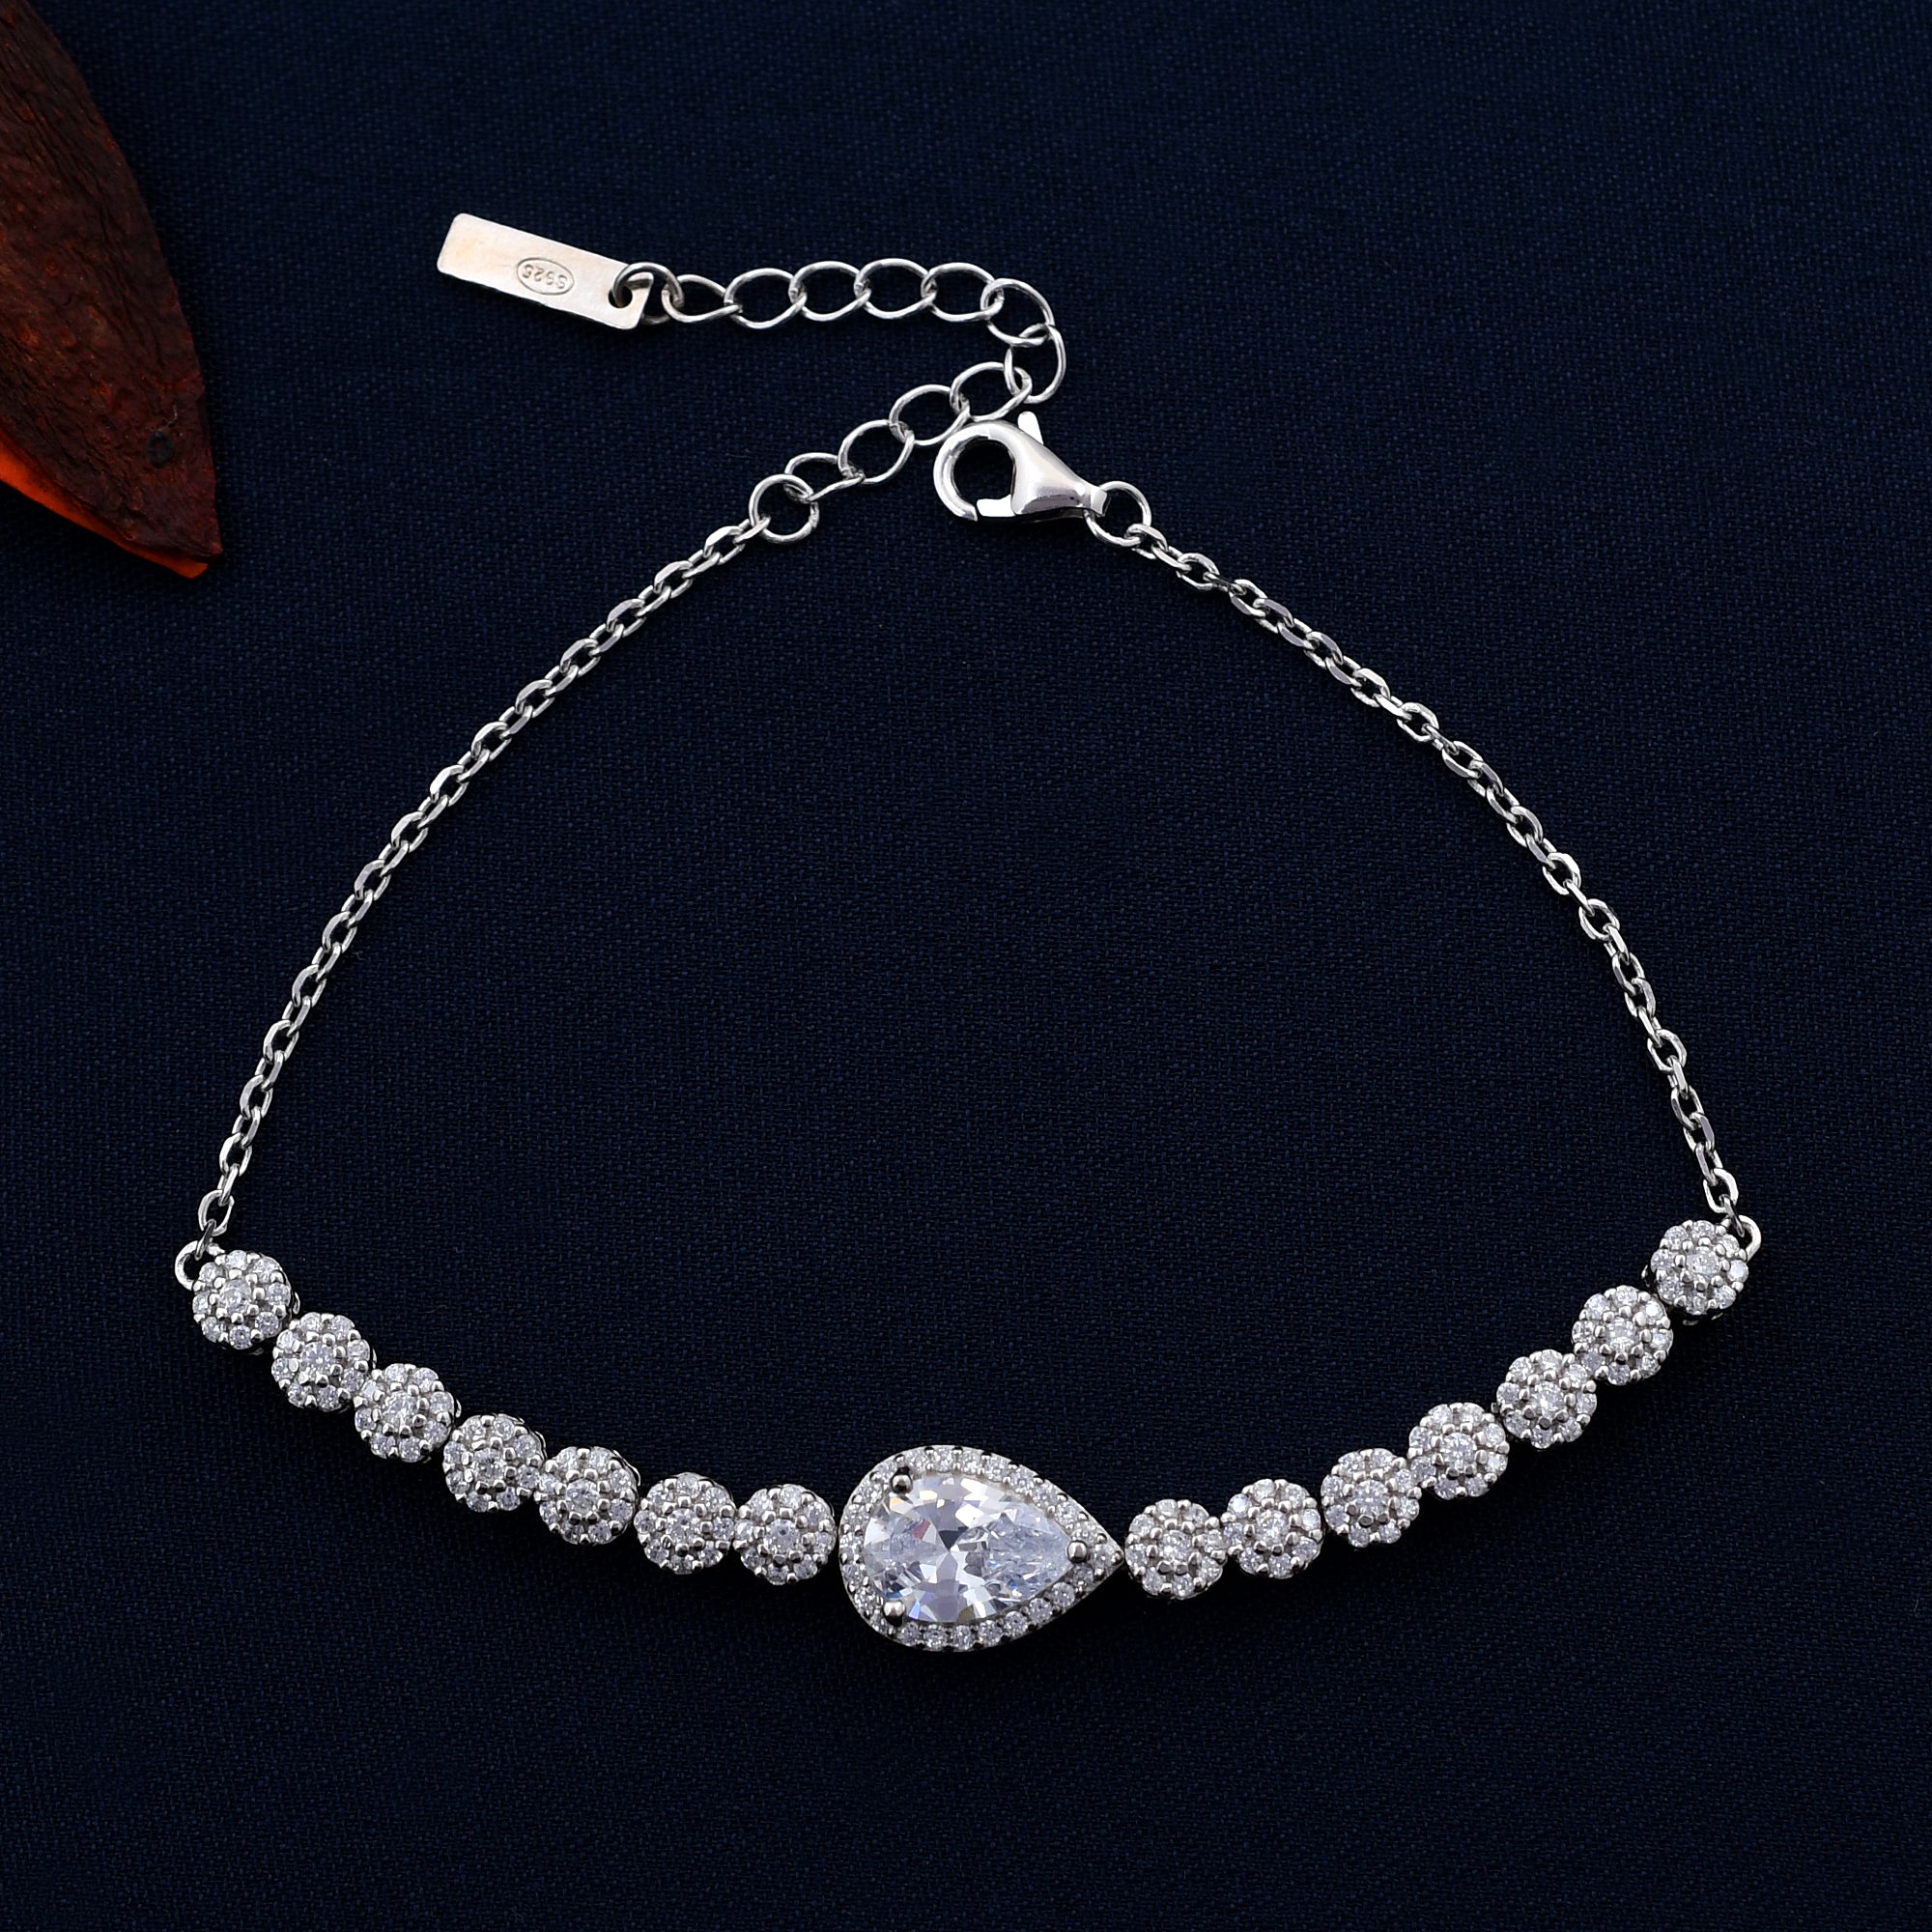 Fashionable 925 Sterling Silver Bracelet